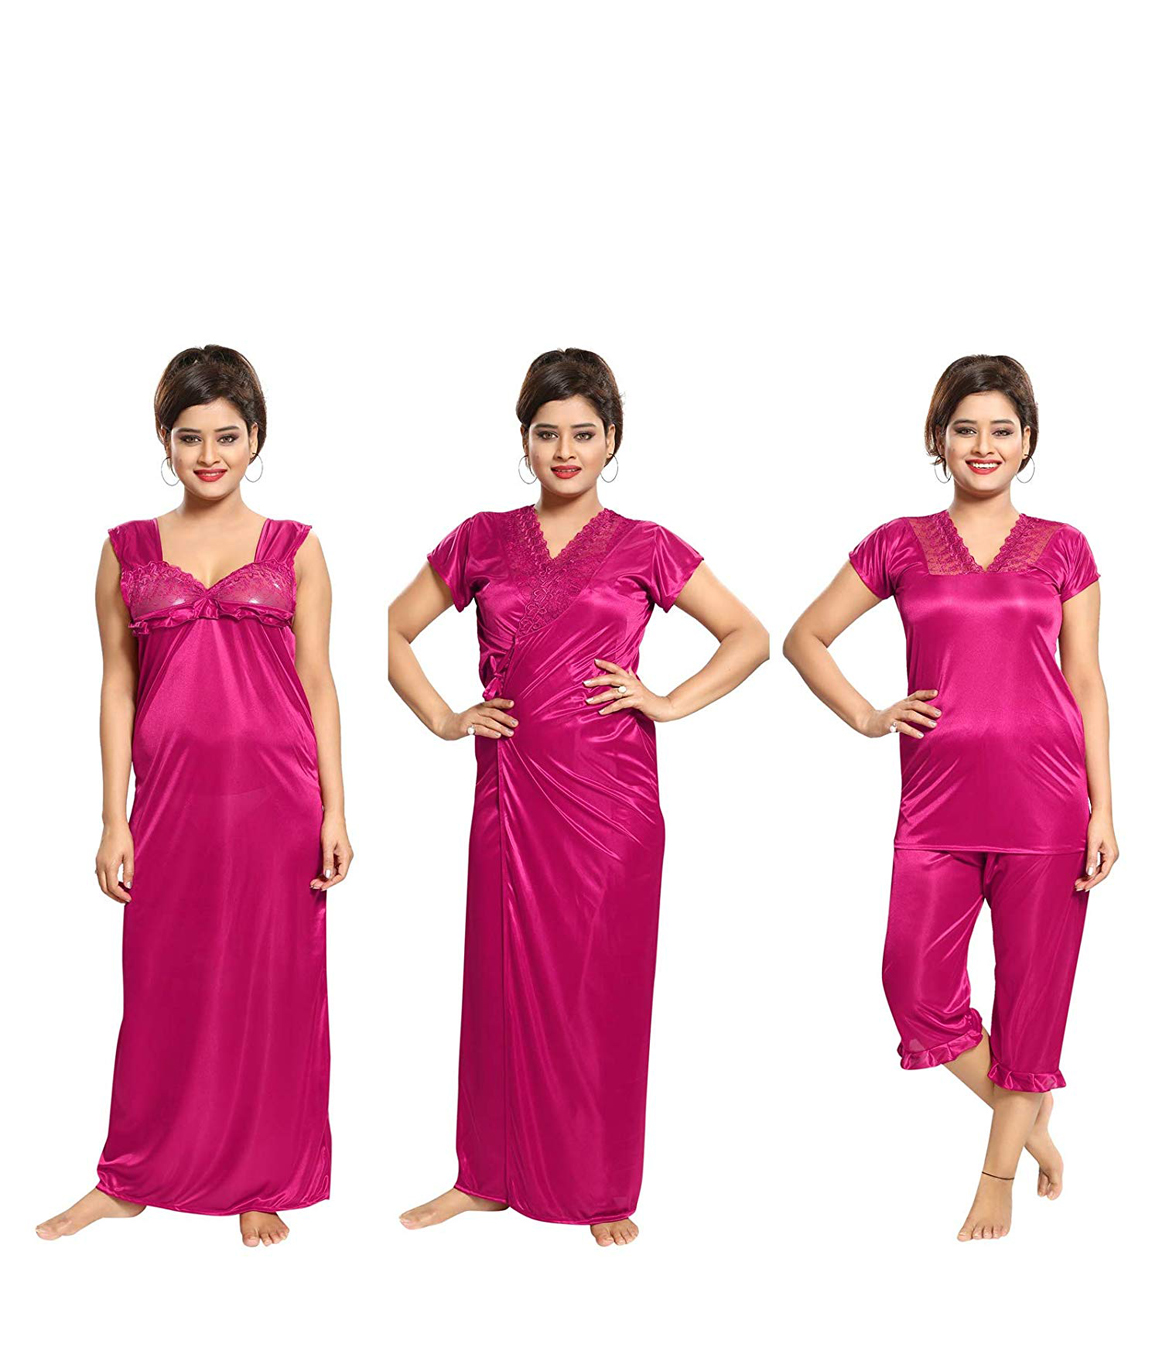 Romaisa Women`s Satin Nightwear Set of 4 Pcs Nighty, Wrap Gown, Top, Capri  (Size - Small, Medium, Large) (Pack of 4)